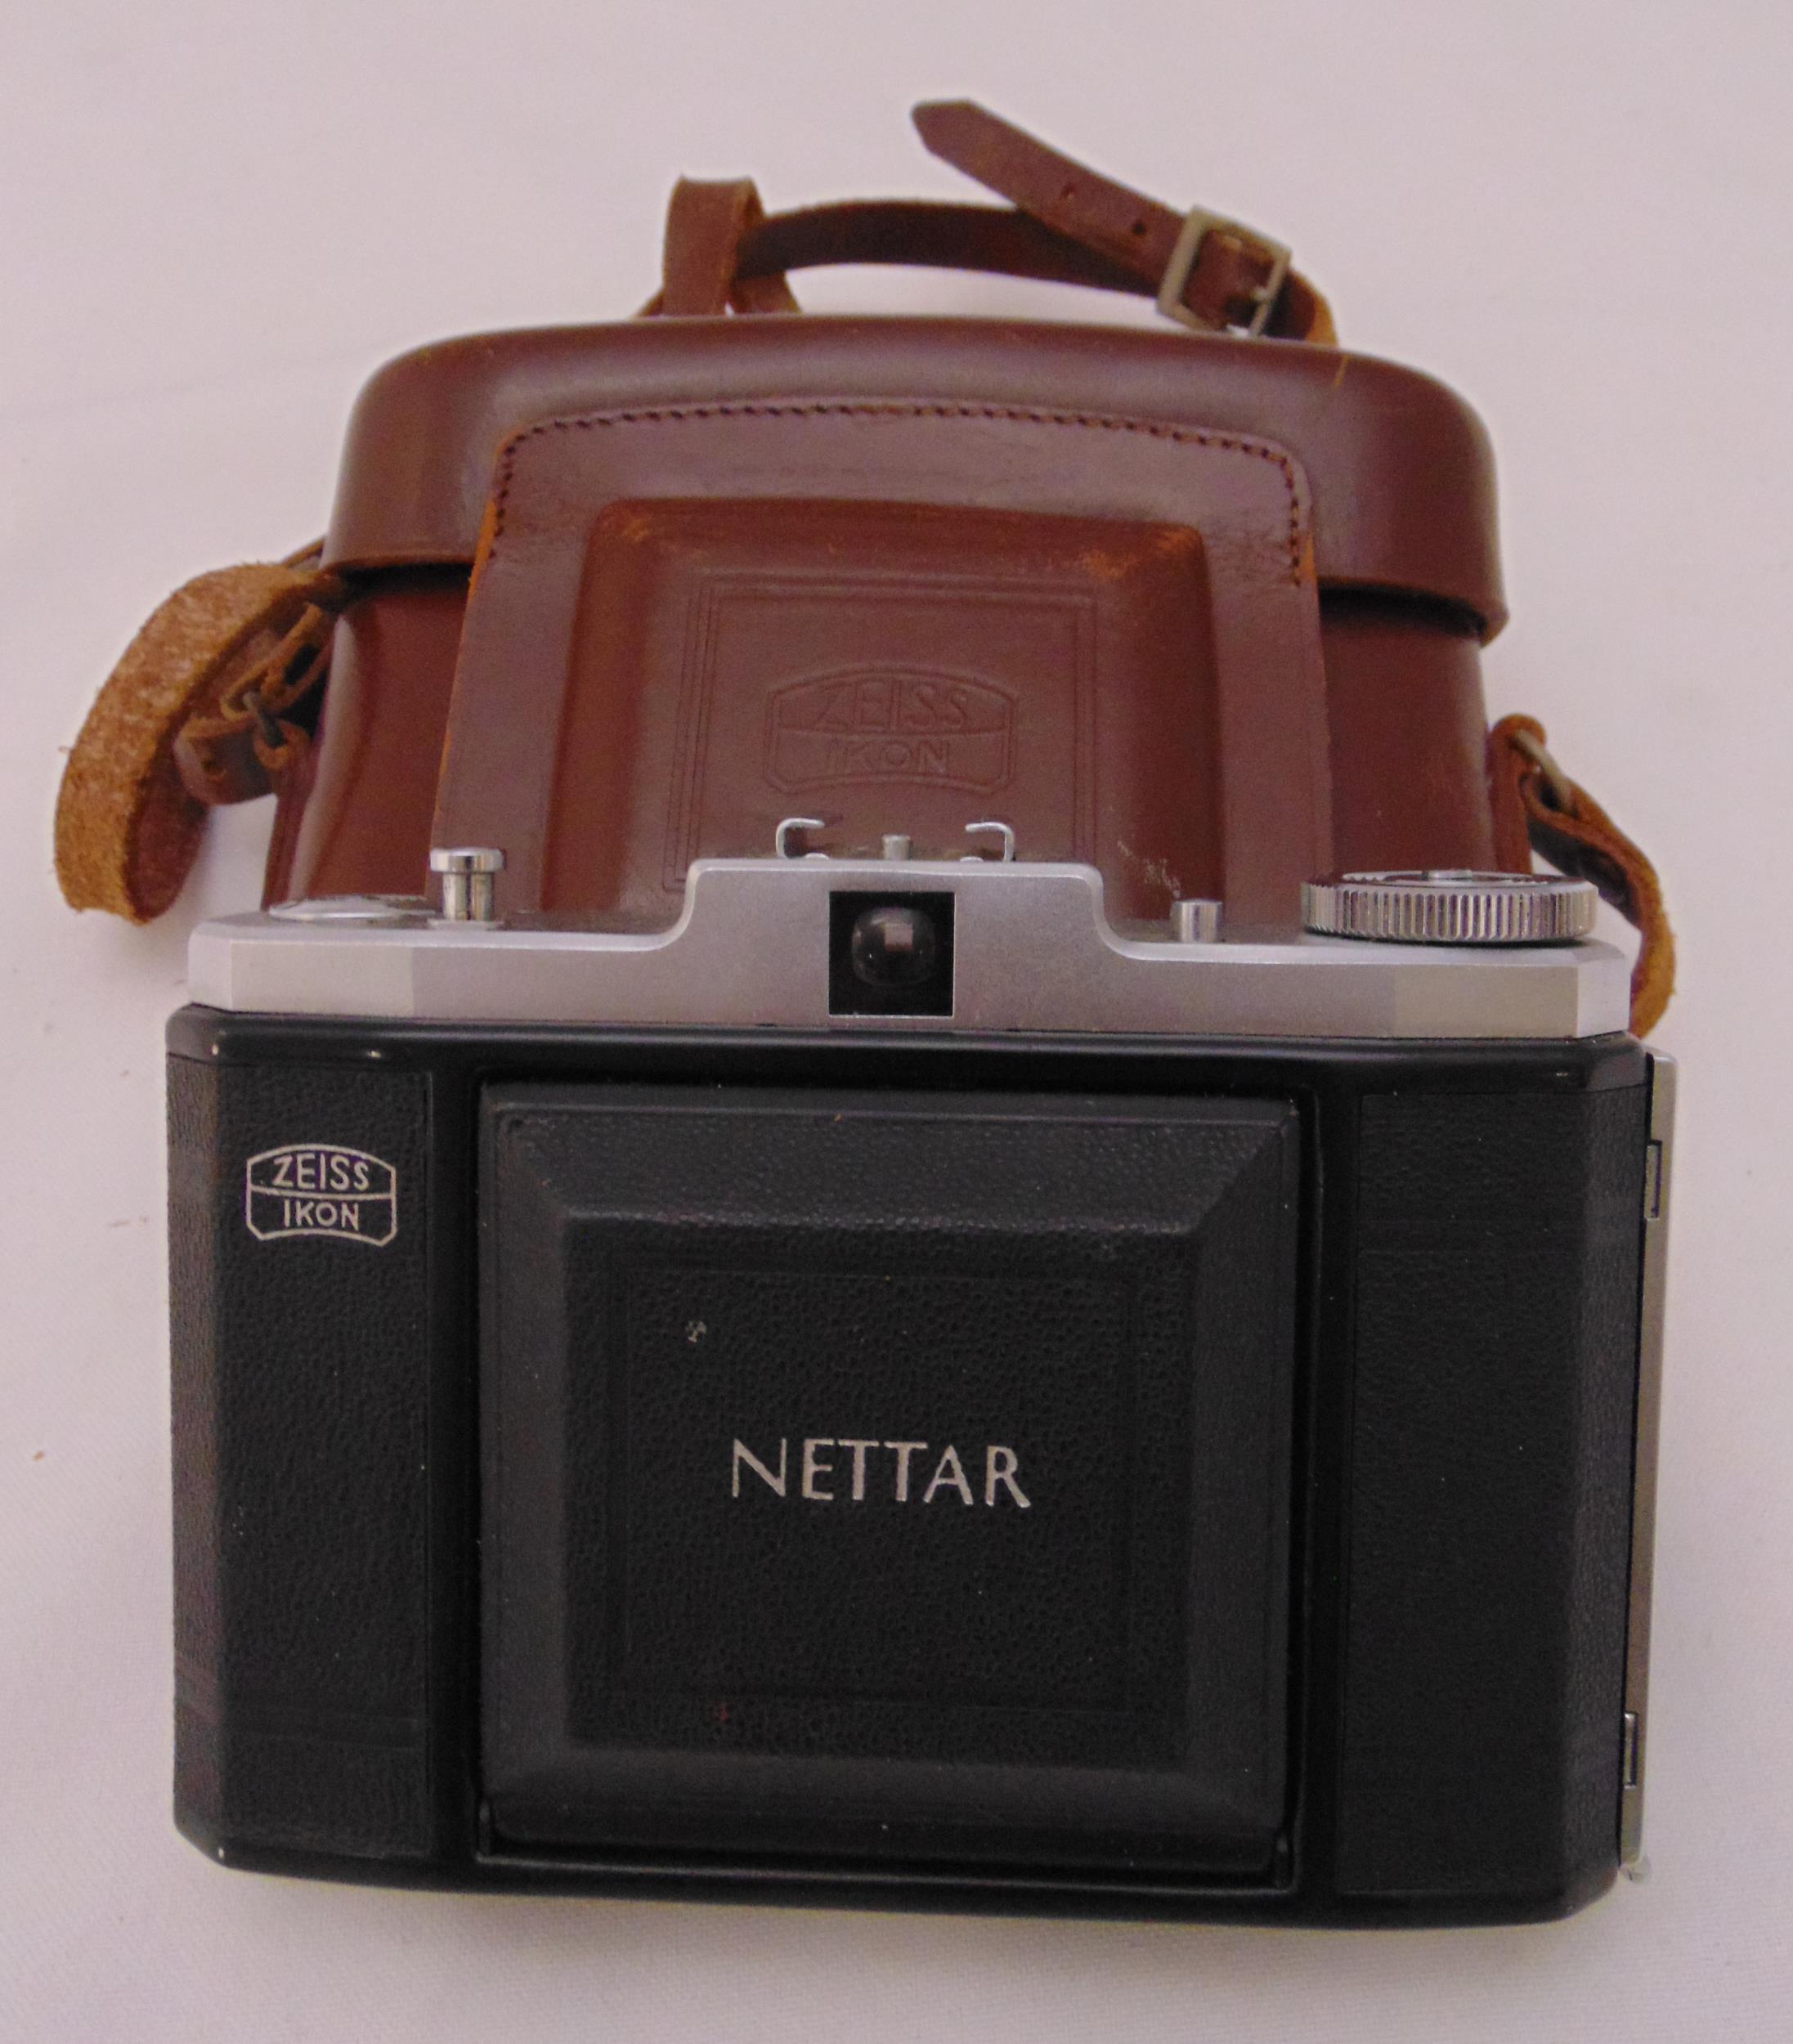 A Zeiss Nettar camera with original carrying case